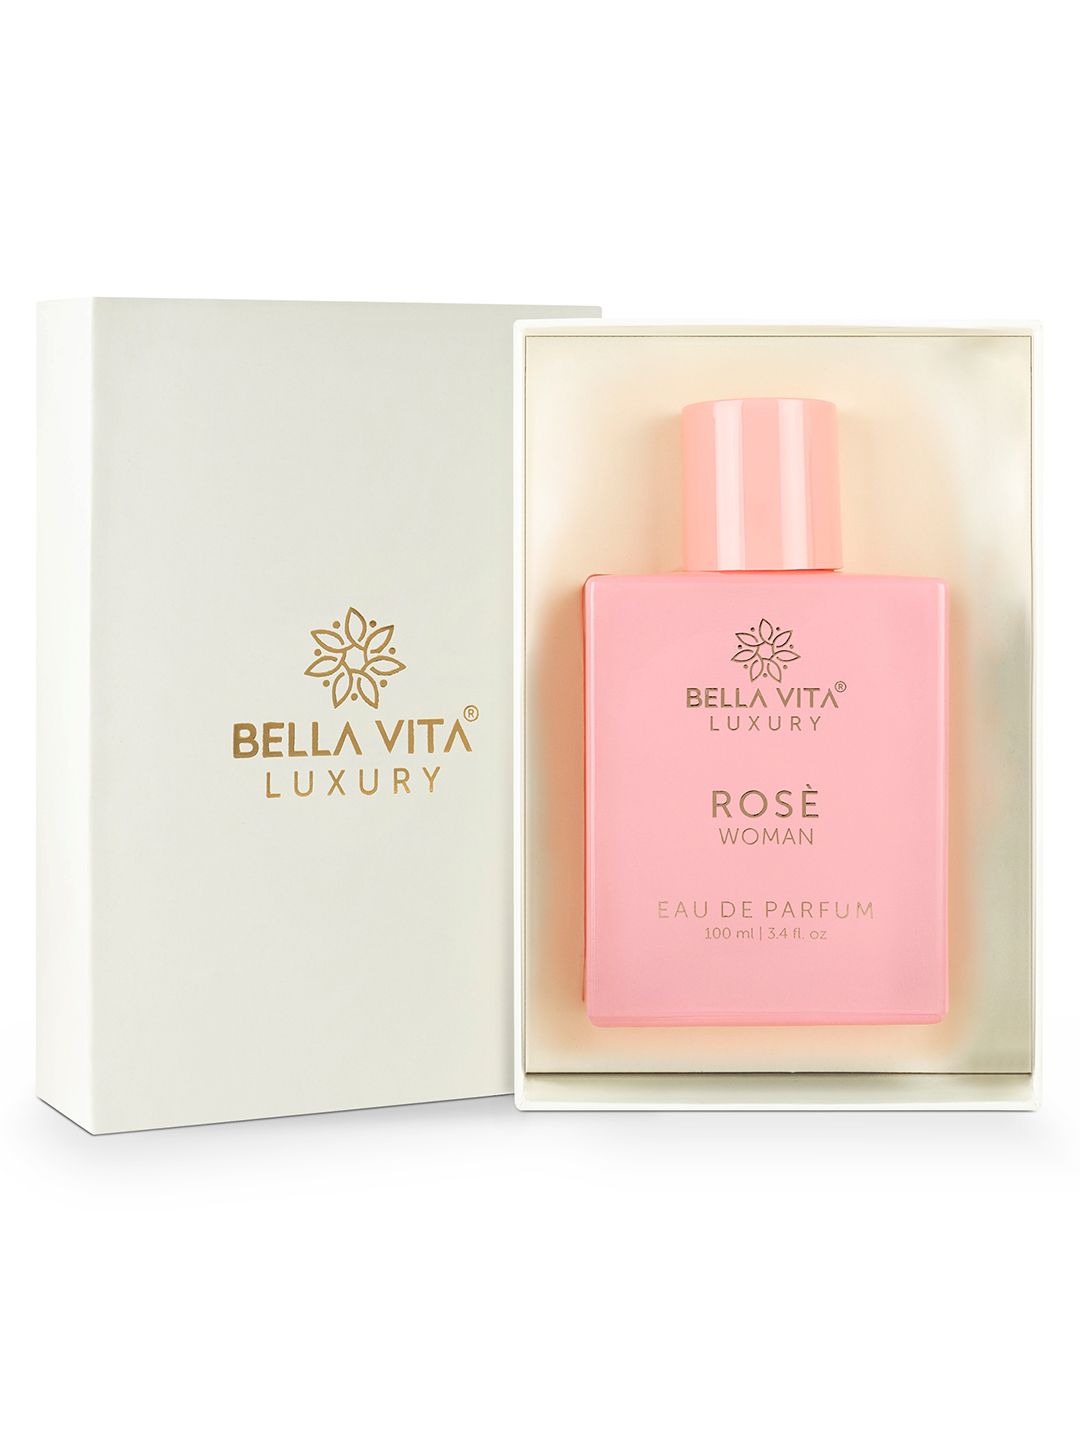 Bella Vita Organic Rose Woman EDP - Luxury Rose With Floral Fragrance - 100 ml Price in India